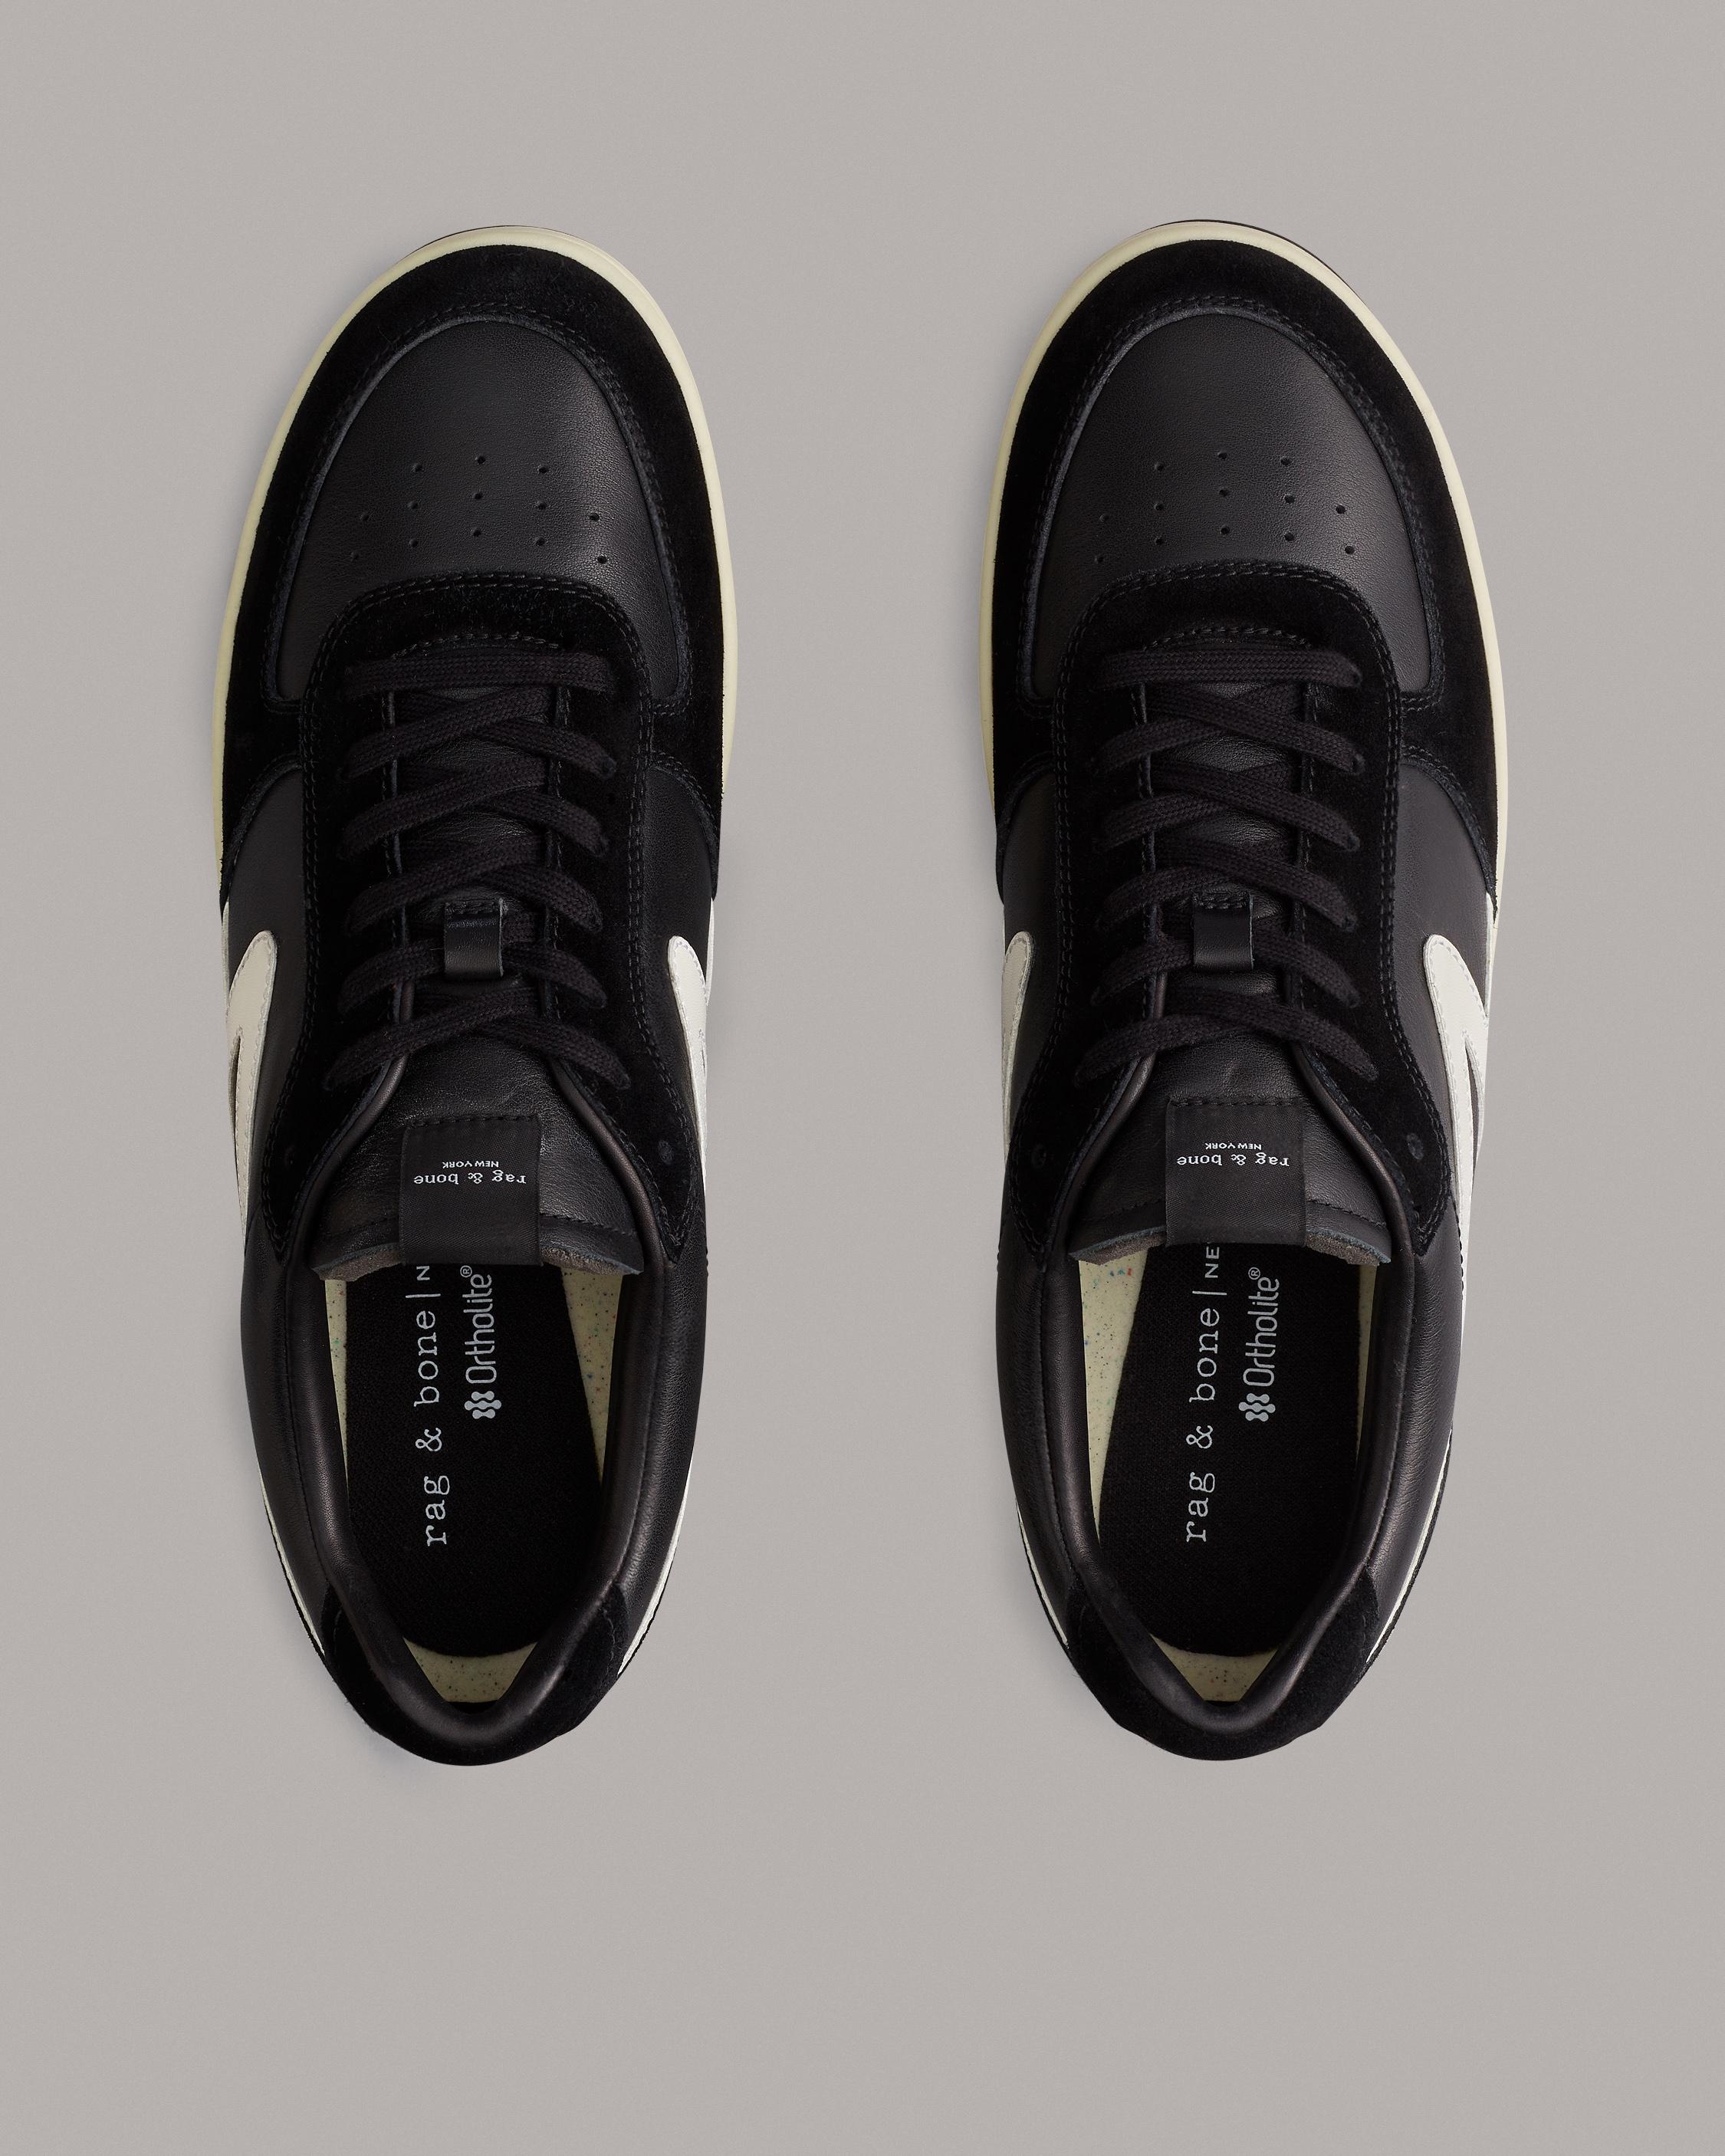 Retro Court Sneaker - Leather
Low Top Sneaker - 2